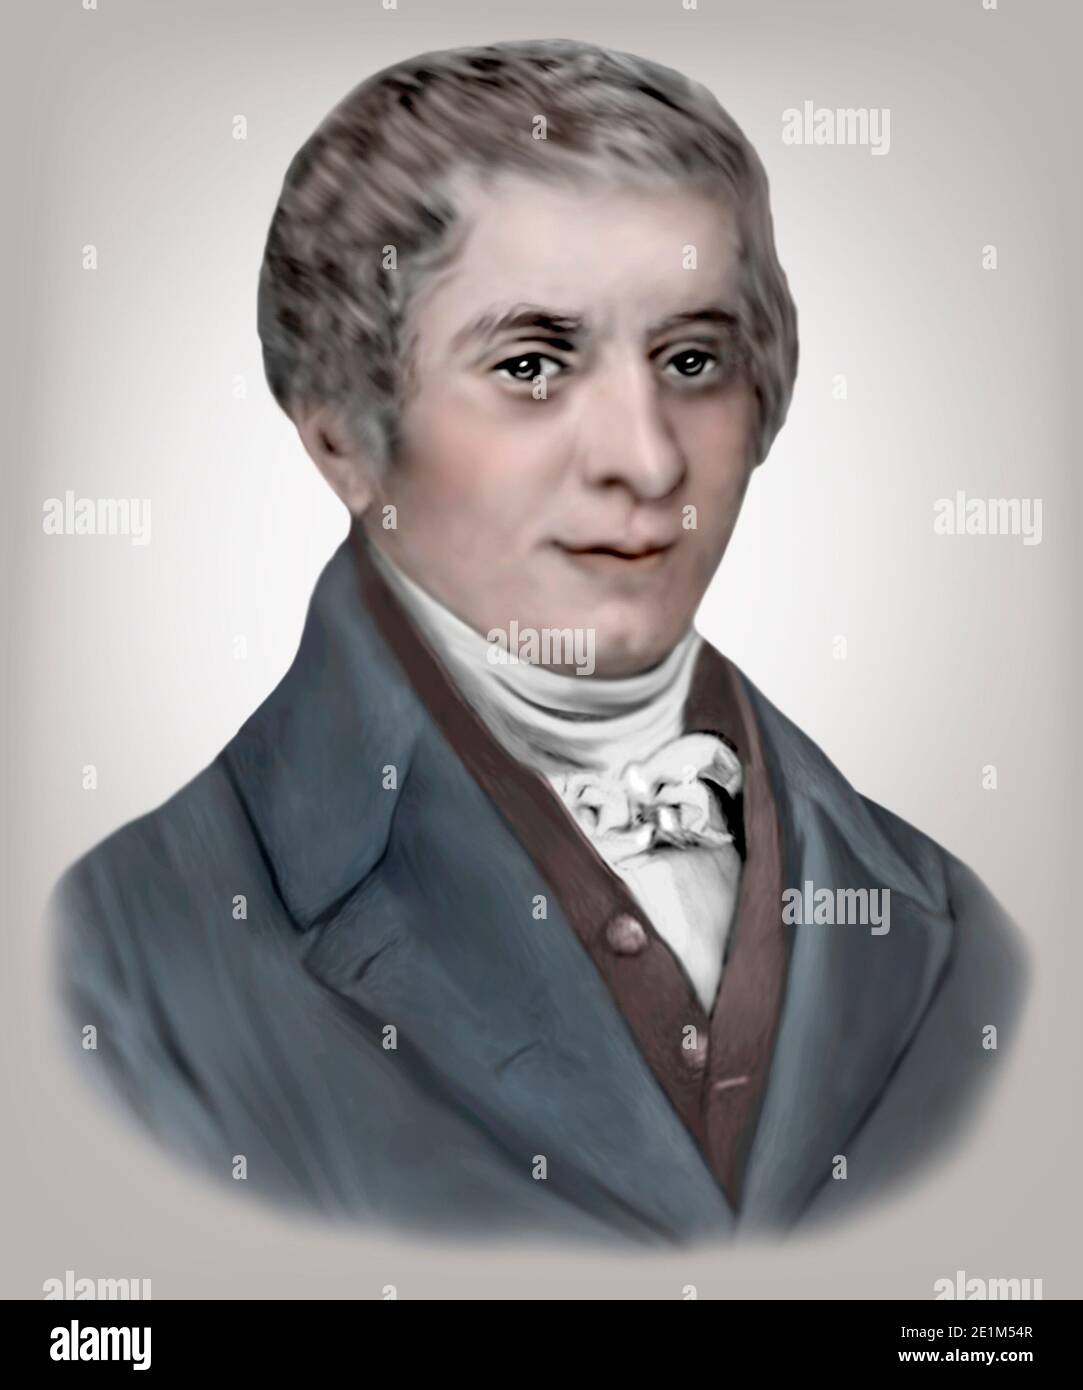 Jean Baptiste Say 1767-1832 French Economist Stock Photo